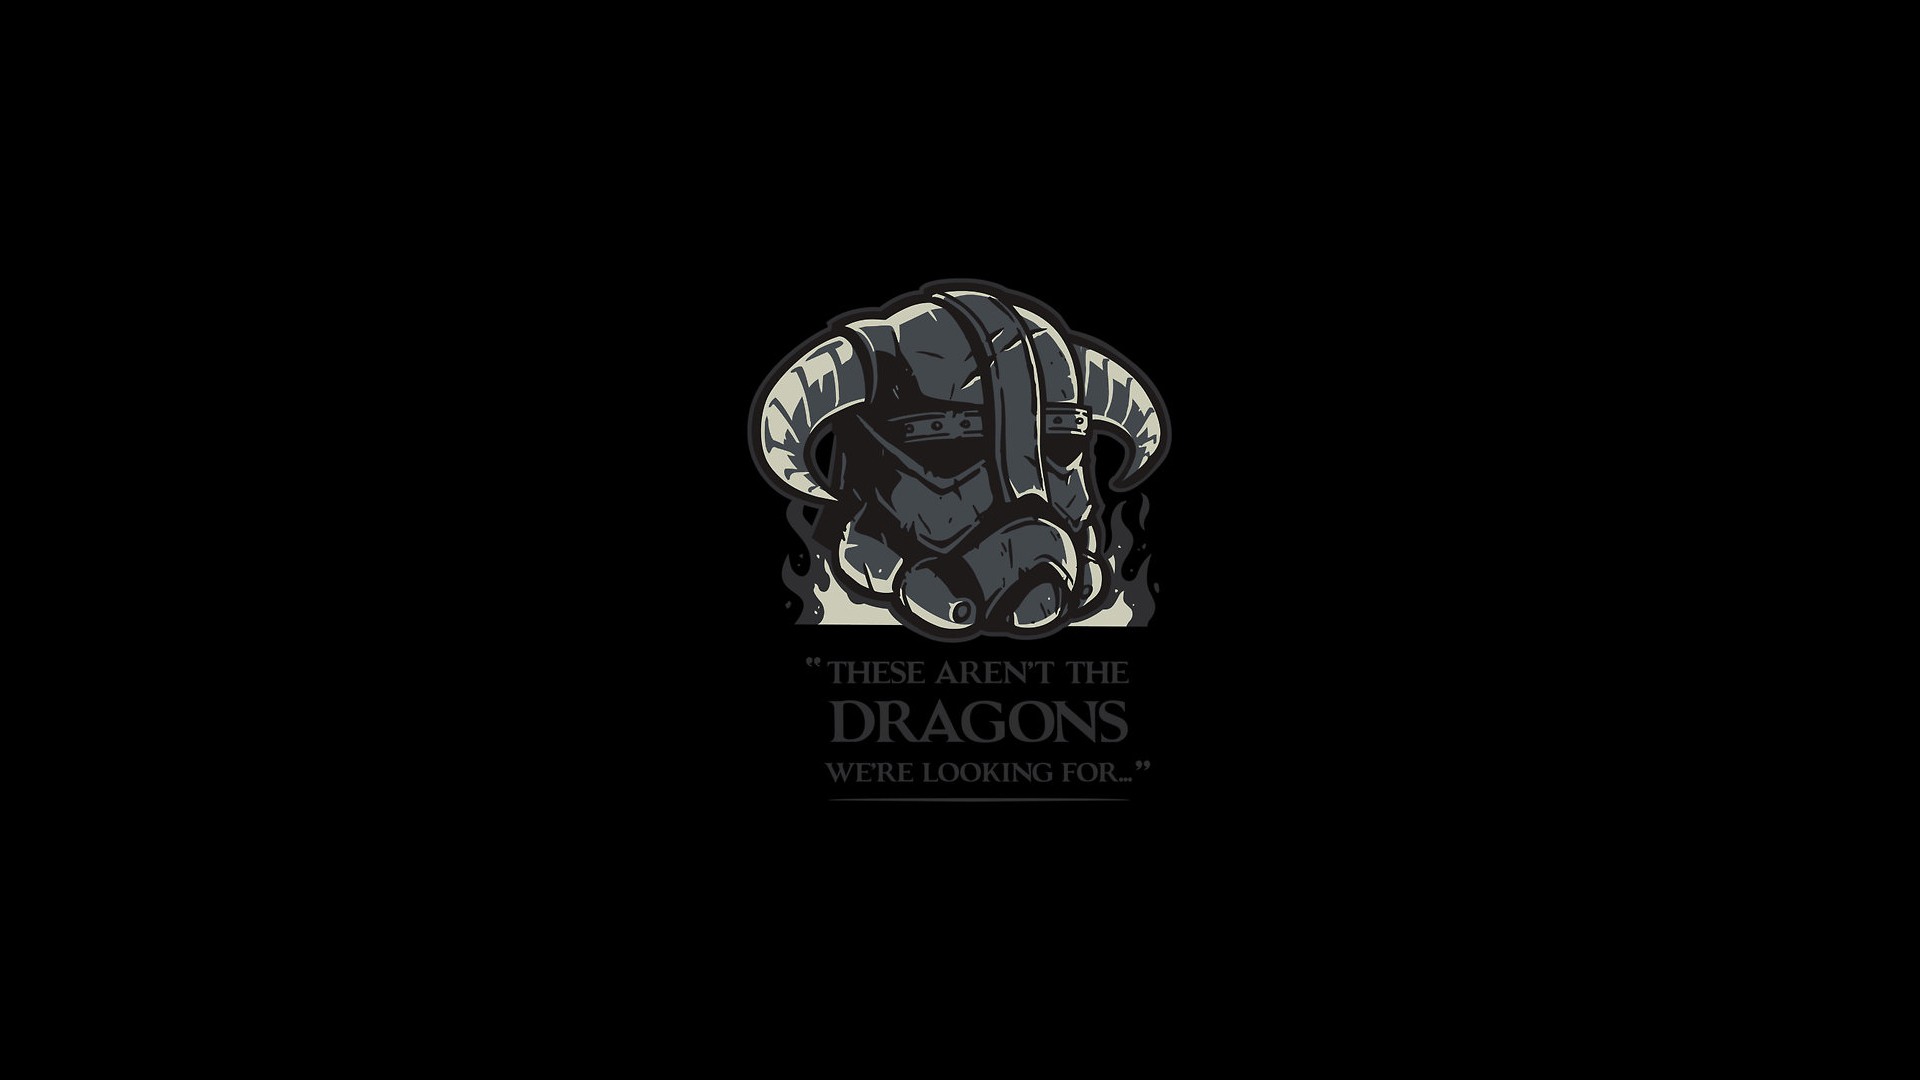 Star Wars, minimalistic, dragons, The Elder Scrolls V: Skyrim, black background - desktop wallpaper